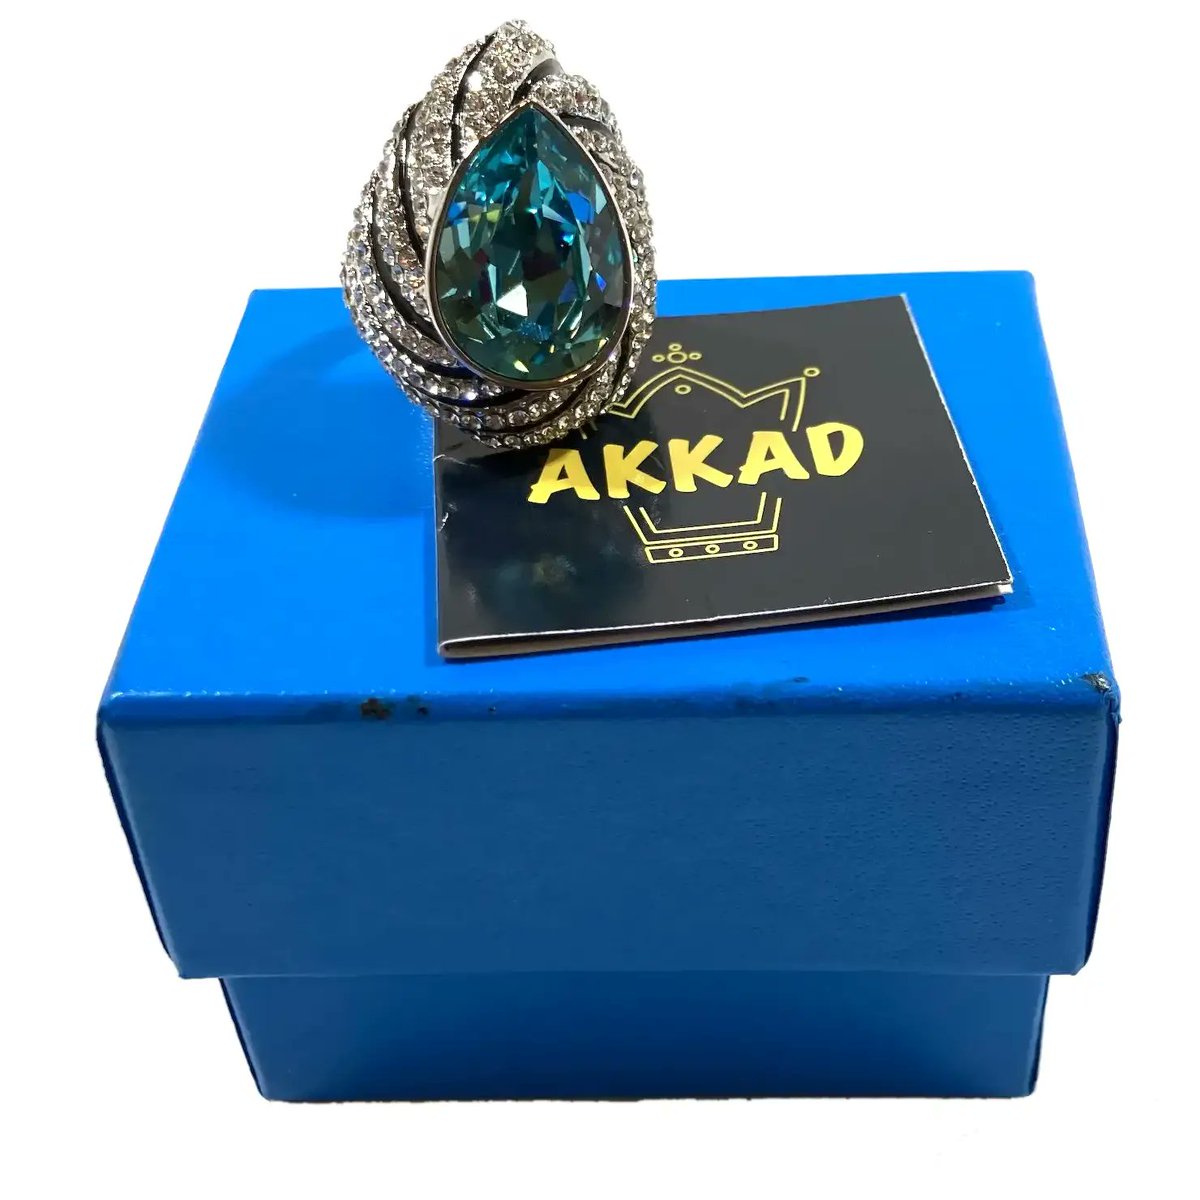 Akkad Large Domed Blue Stone Clear Rhinestones Statement Ring MIB Size 7
#rubylane #vintage #jewelry #rings #rhinestones #designer #hautecouture #giftideas 
#jewelryaddict #vintagebeginshere 
rubylane.com/item/136230-E1…